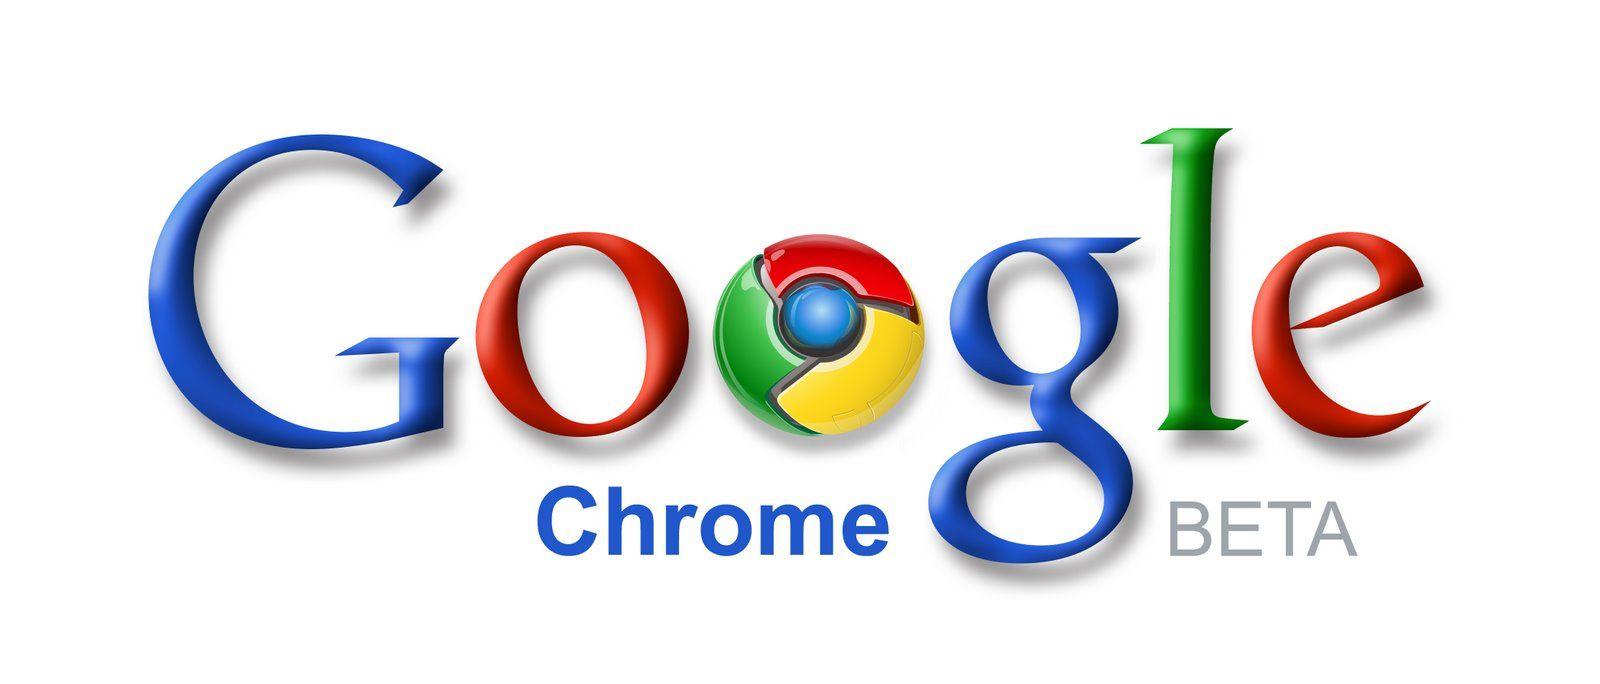 Chrome Logo - Google Chrome | Logopedia | FANDOM powered by Wikia